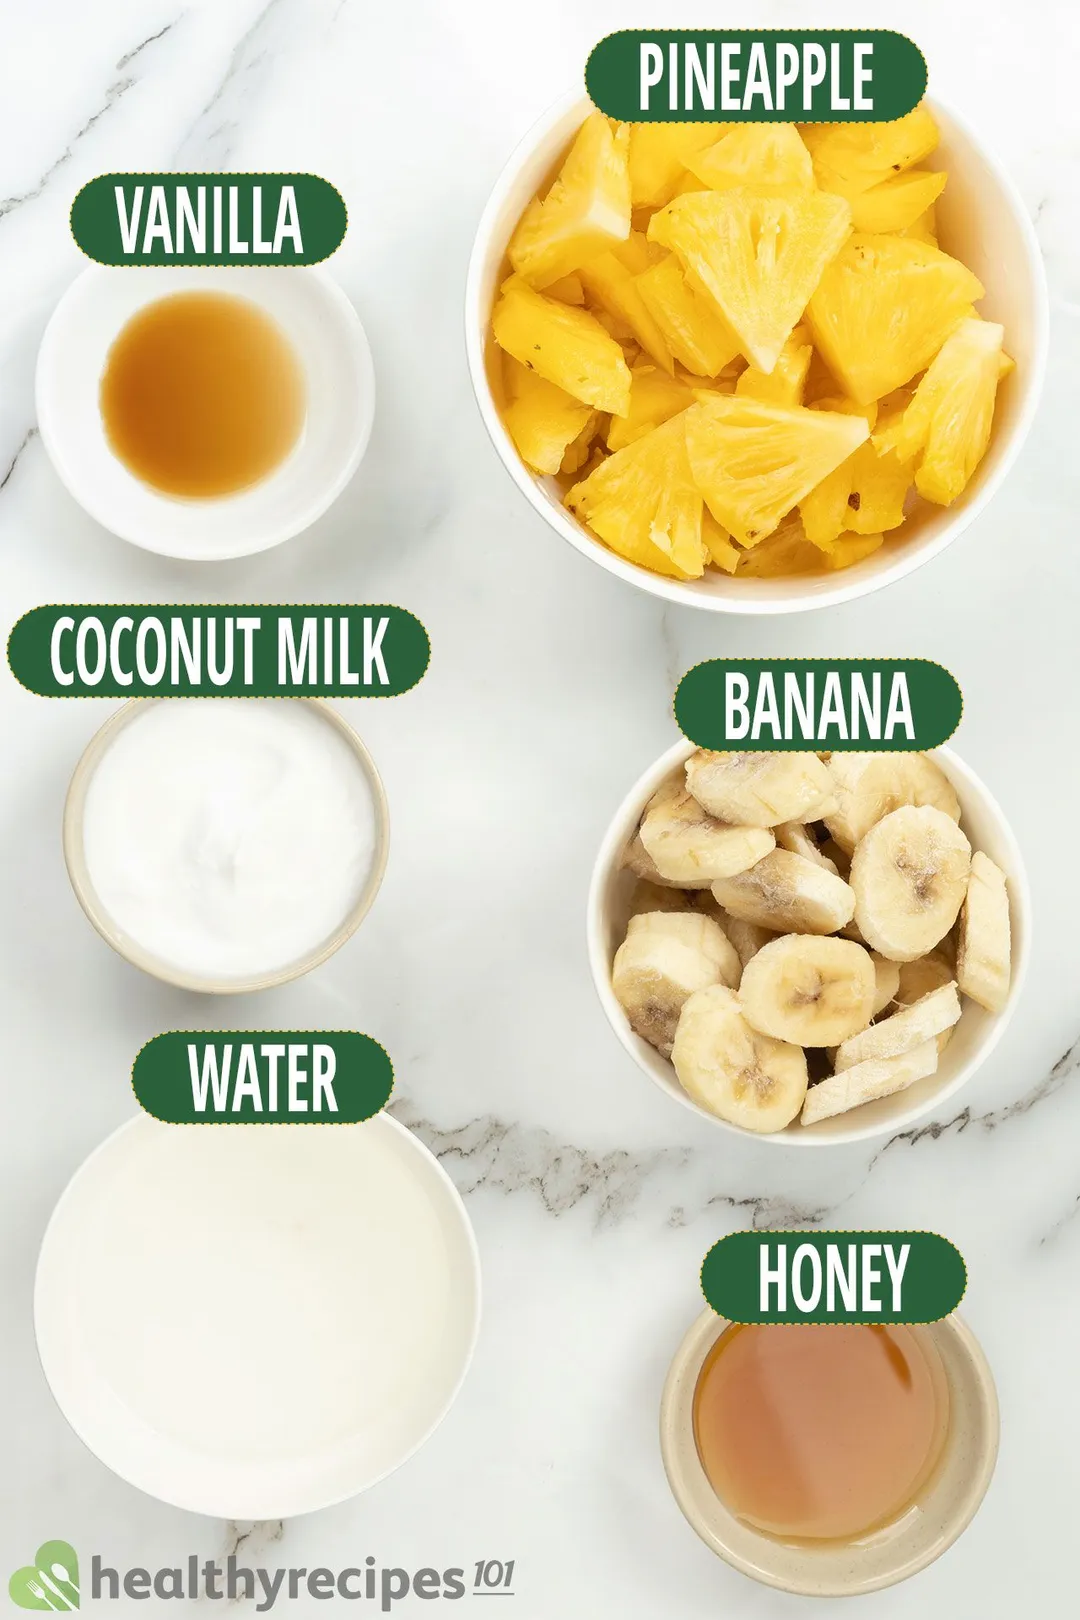 Pineapple Smoothie ingredients: pineapple slices, banana slices, honey, milk